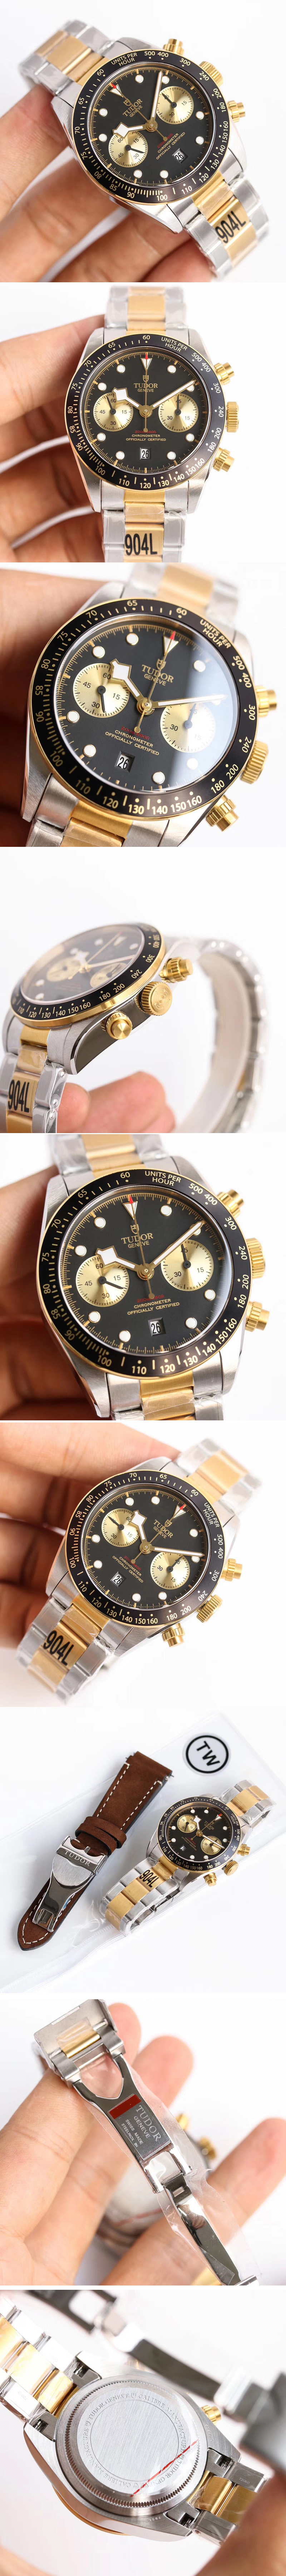 Replica Tudor Watches